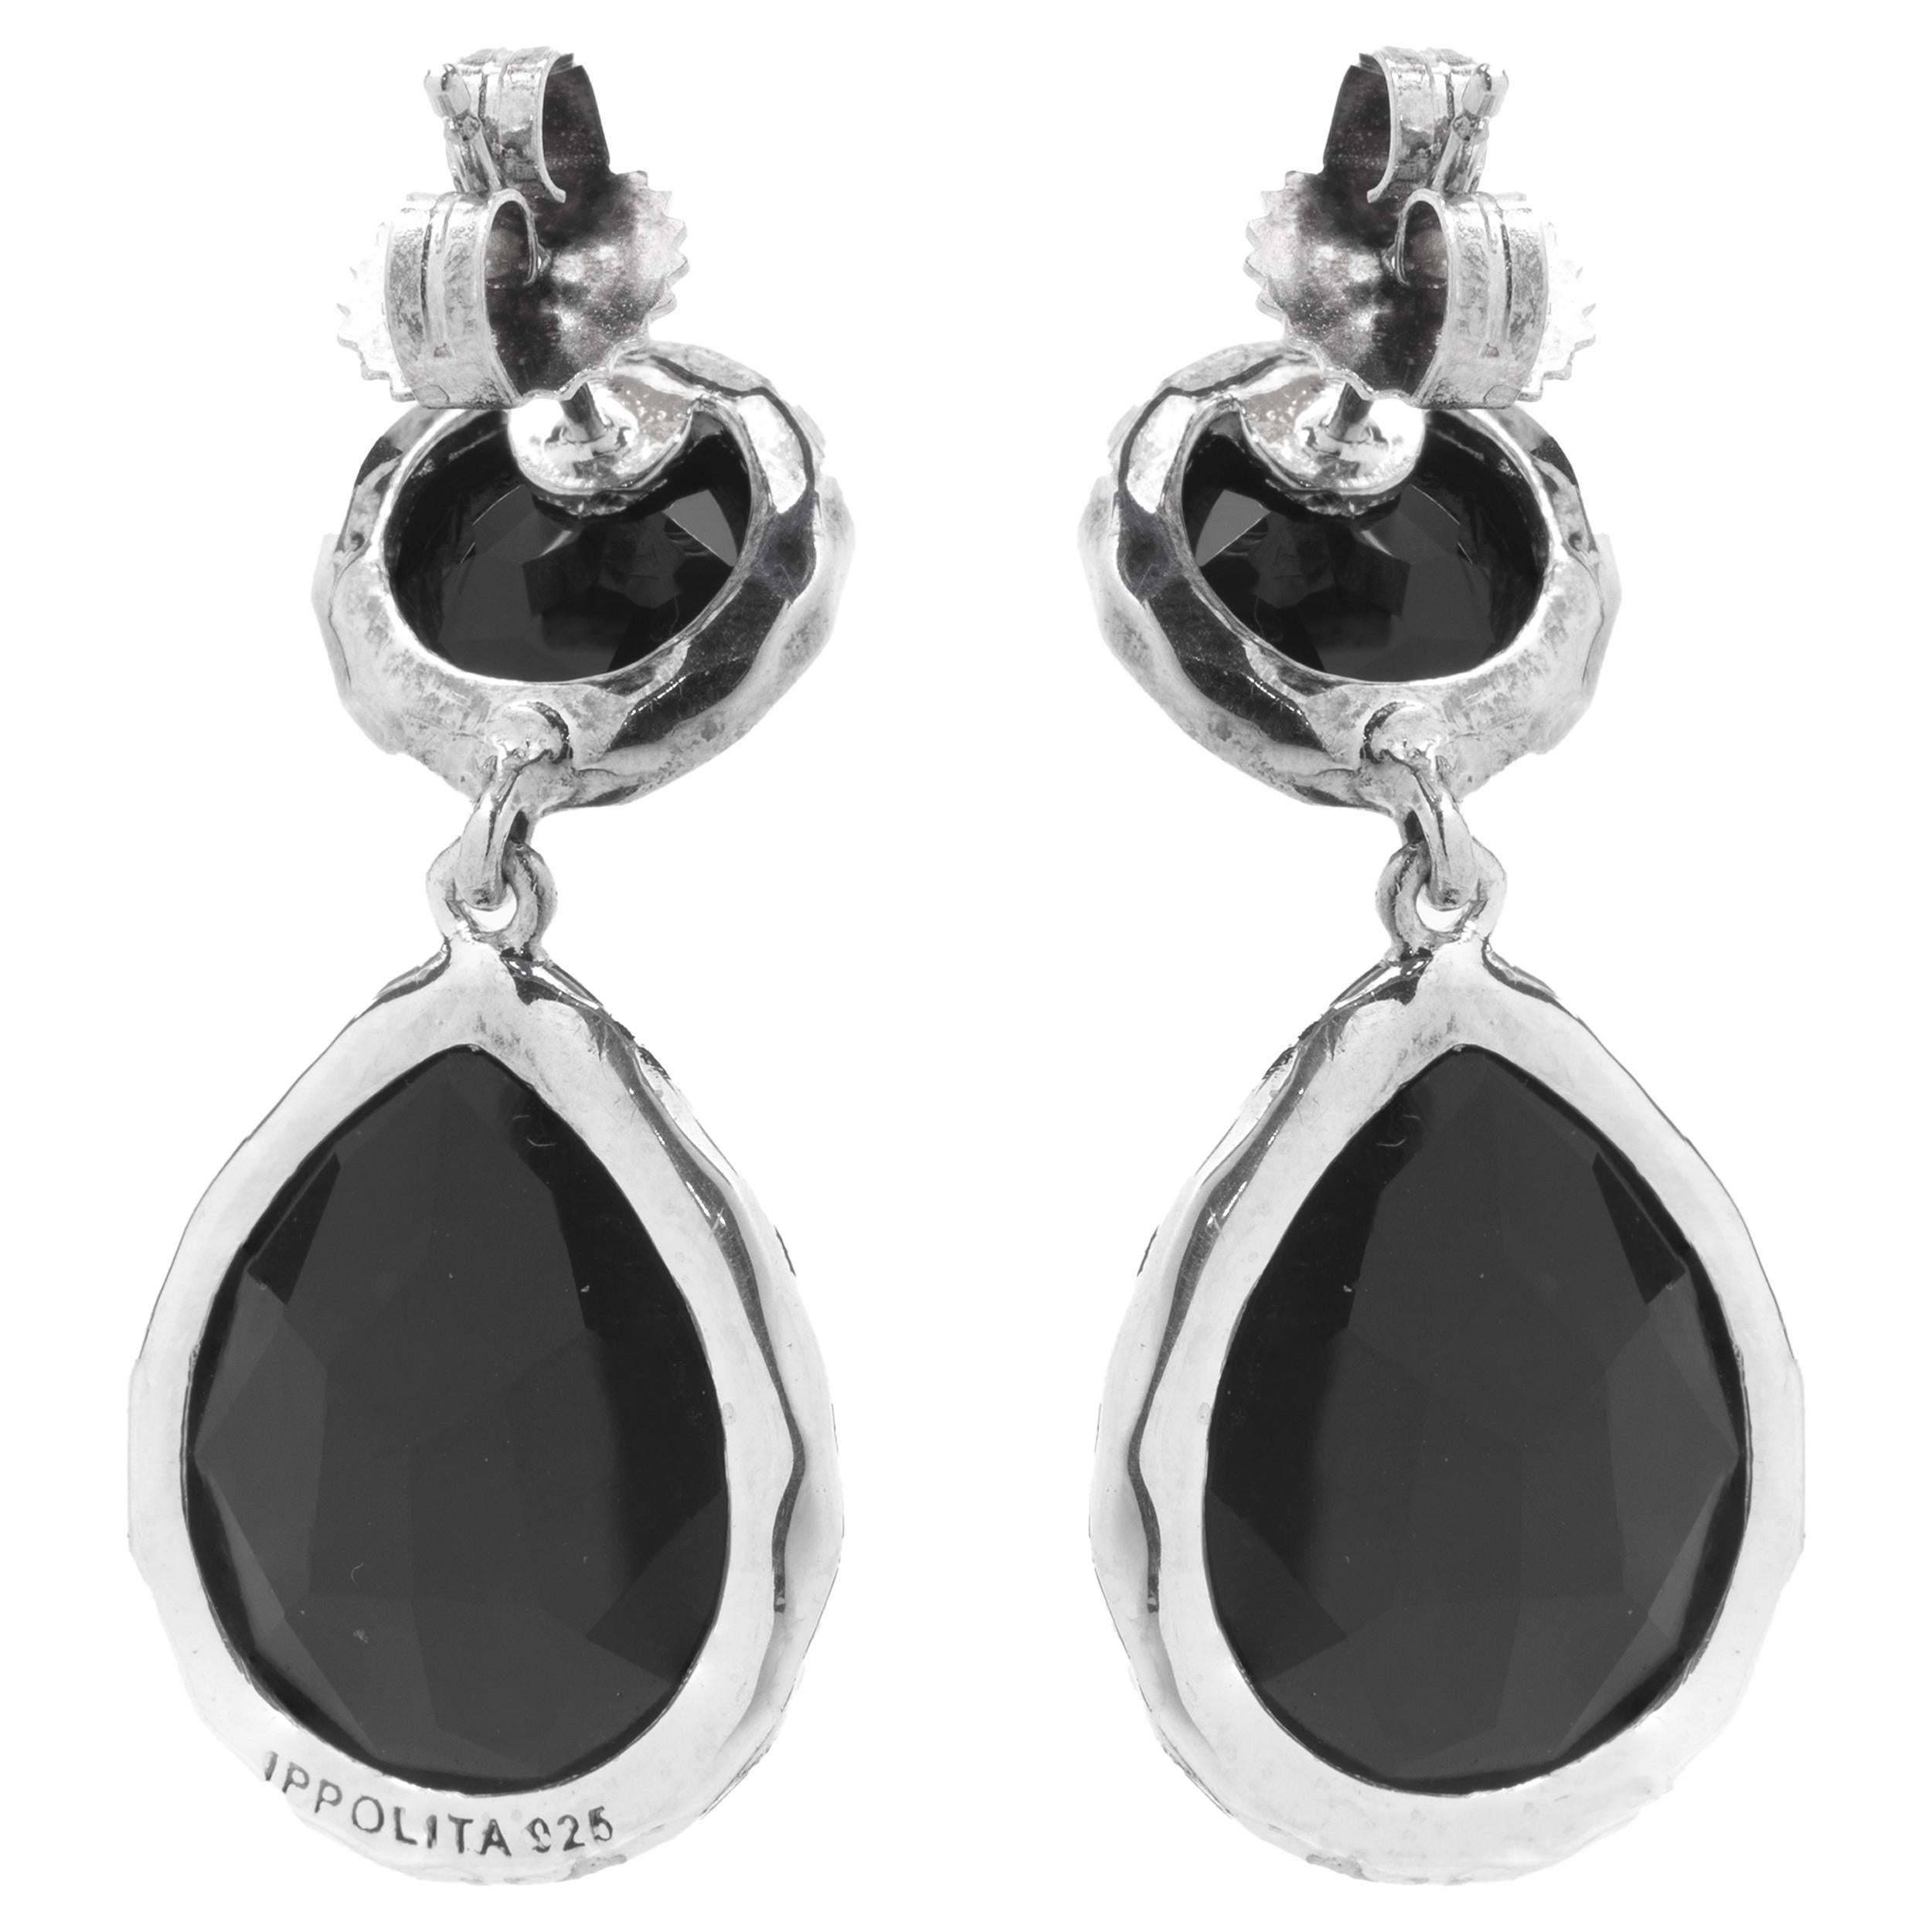 Designer: Ippolita
Material: sterling silver 
Dimensions: earrings measure 32 X 15mm 
Weight: 7.77 grams
